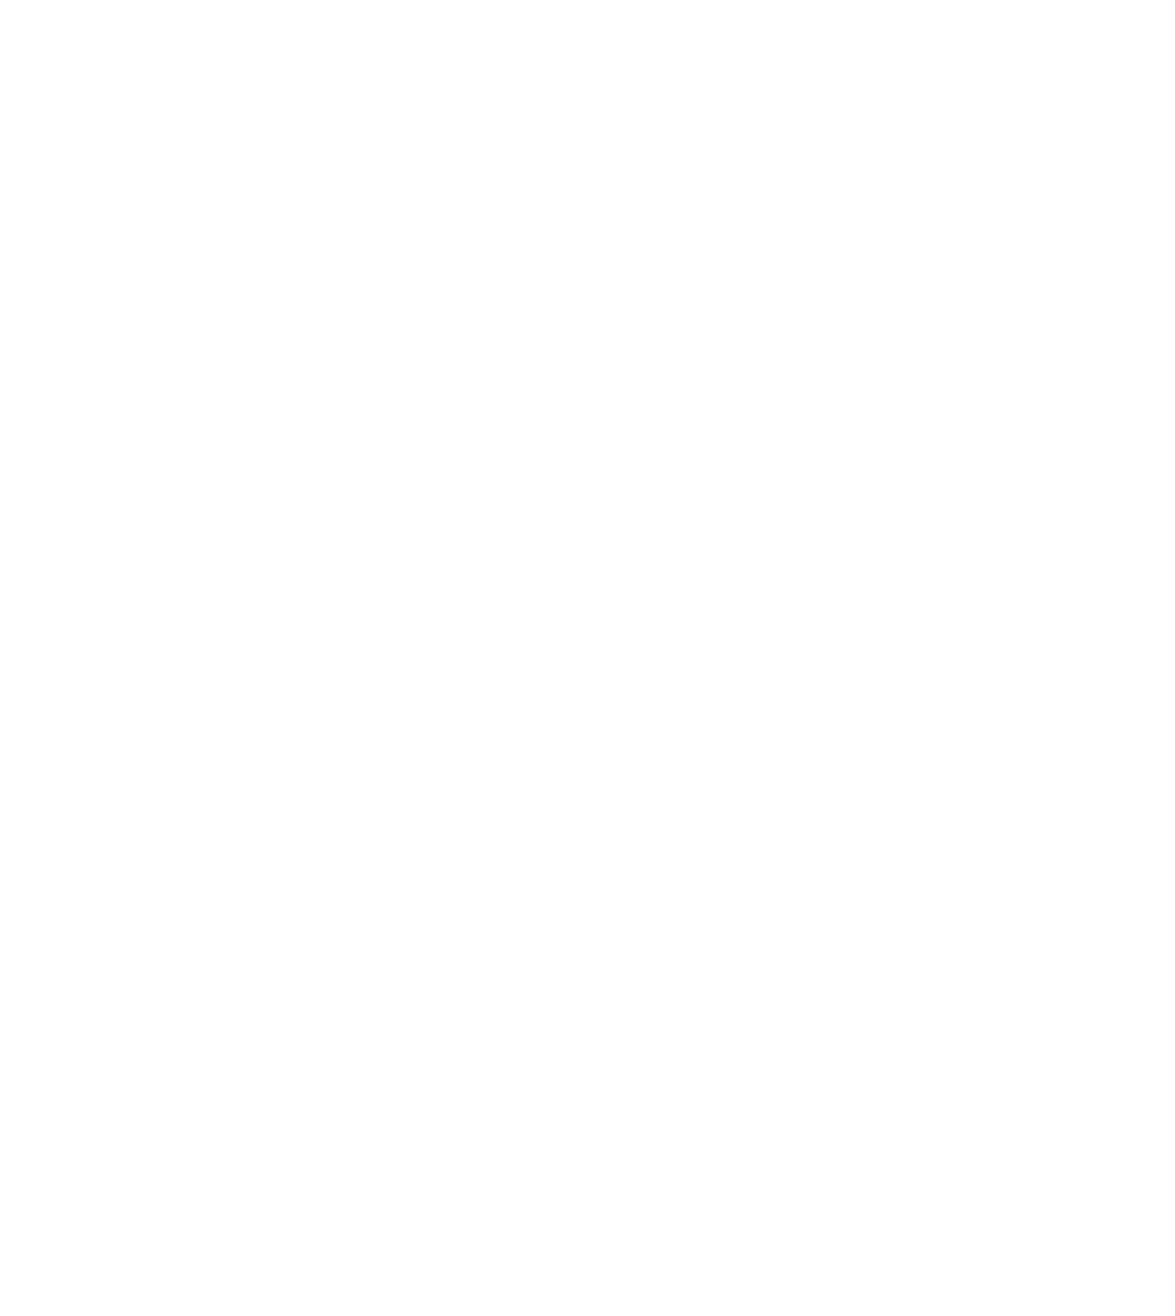 Koheid Design - Landscape Architecture - Orange County